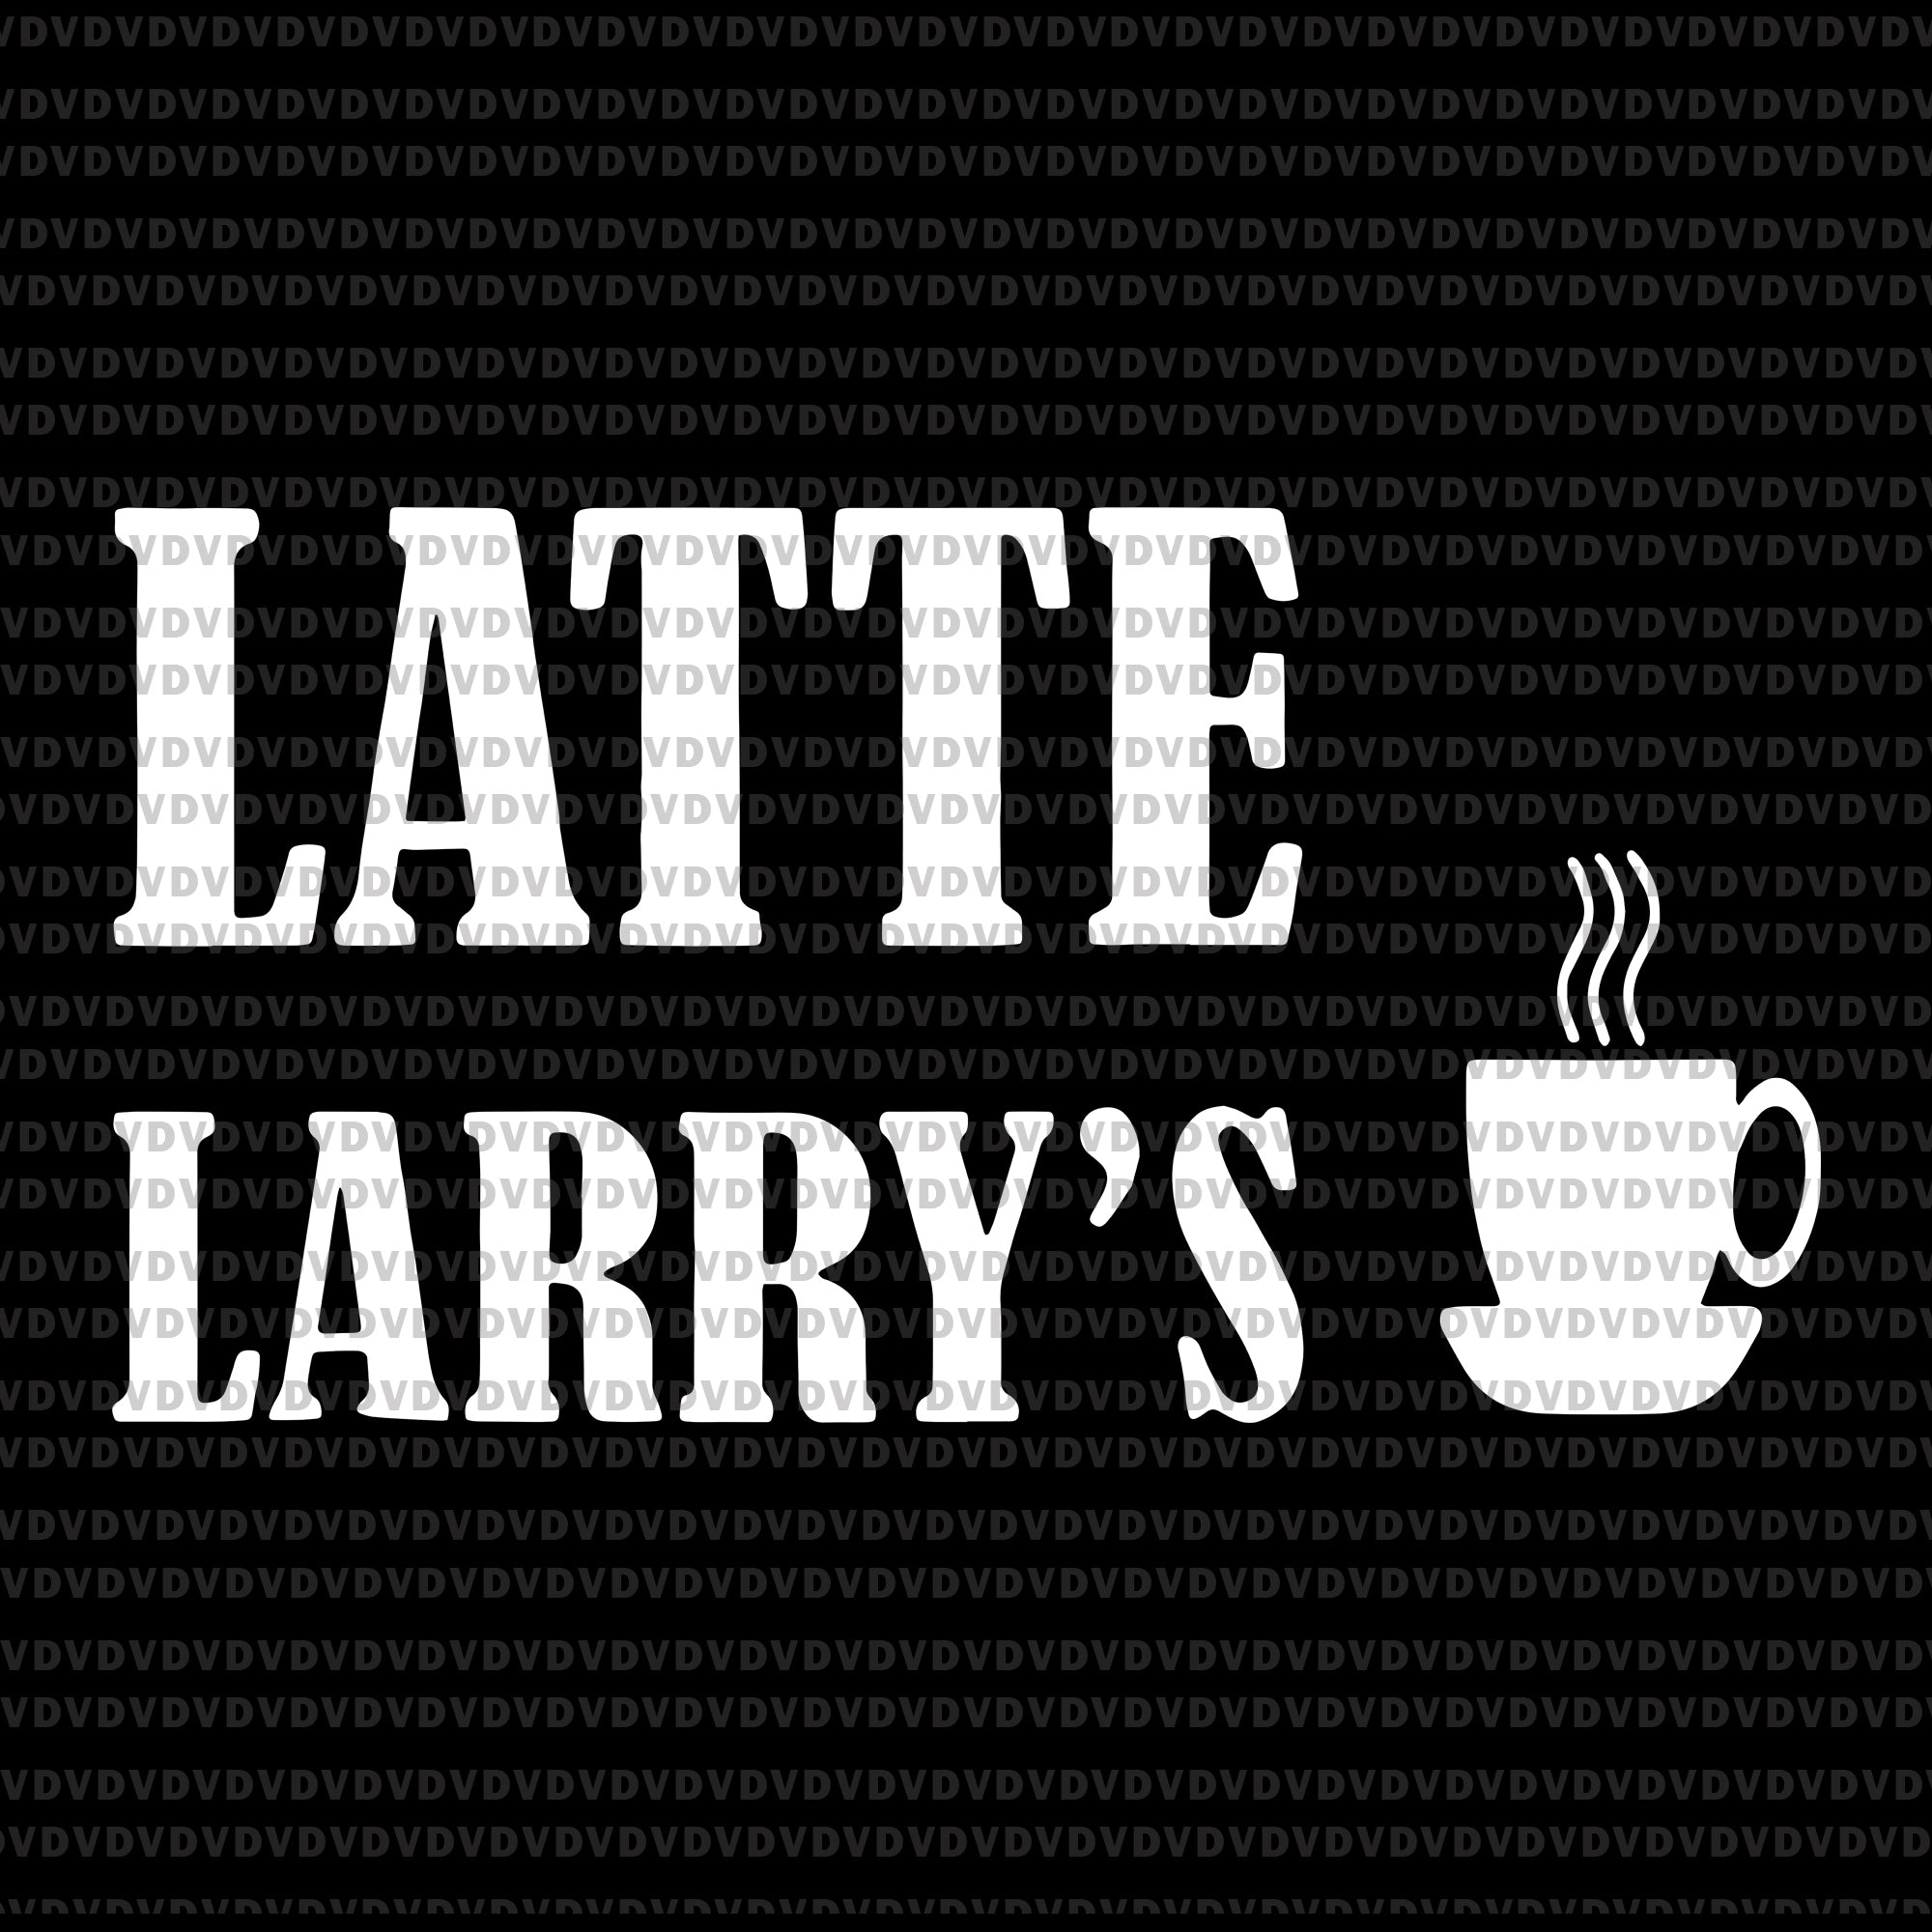 Latte larry’s svg, latte larry’s, latte larry’s png, latte larry, latte larry’s funny eps, dxf, svg, png file